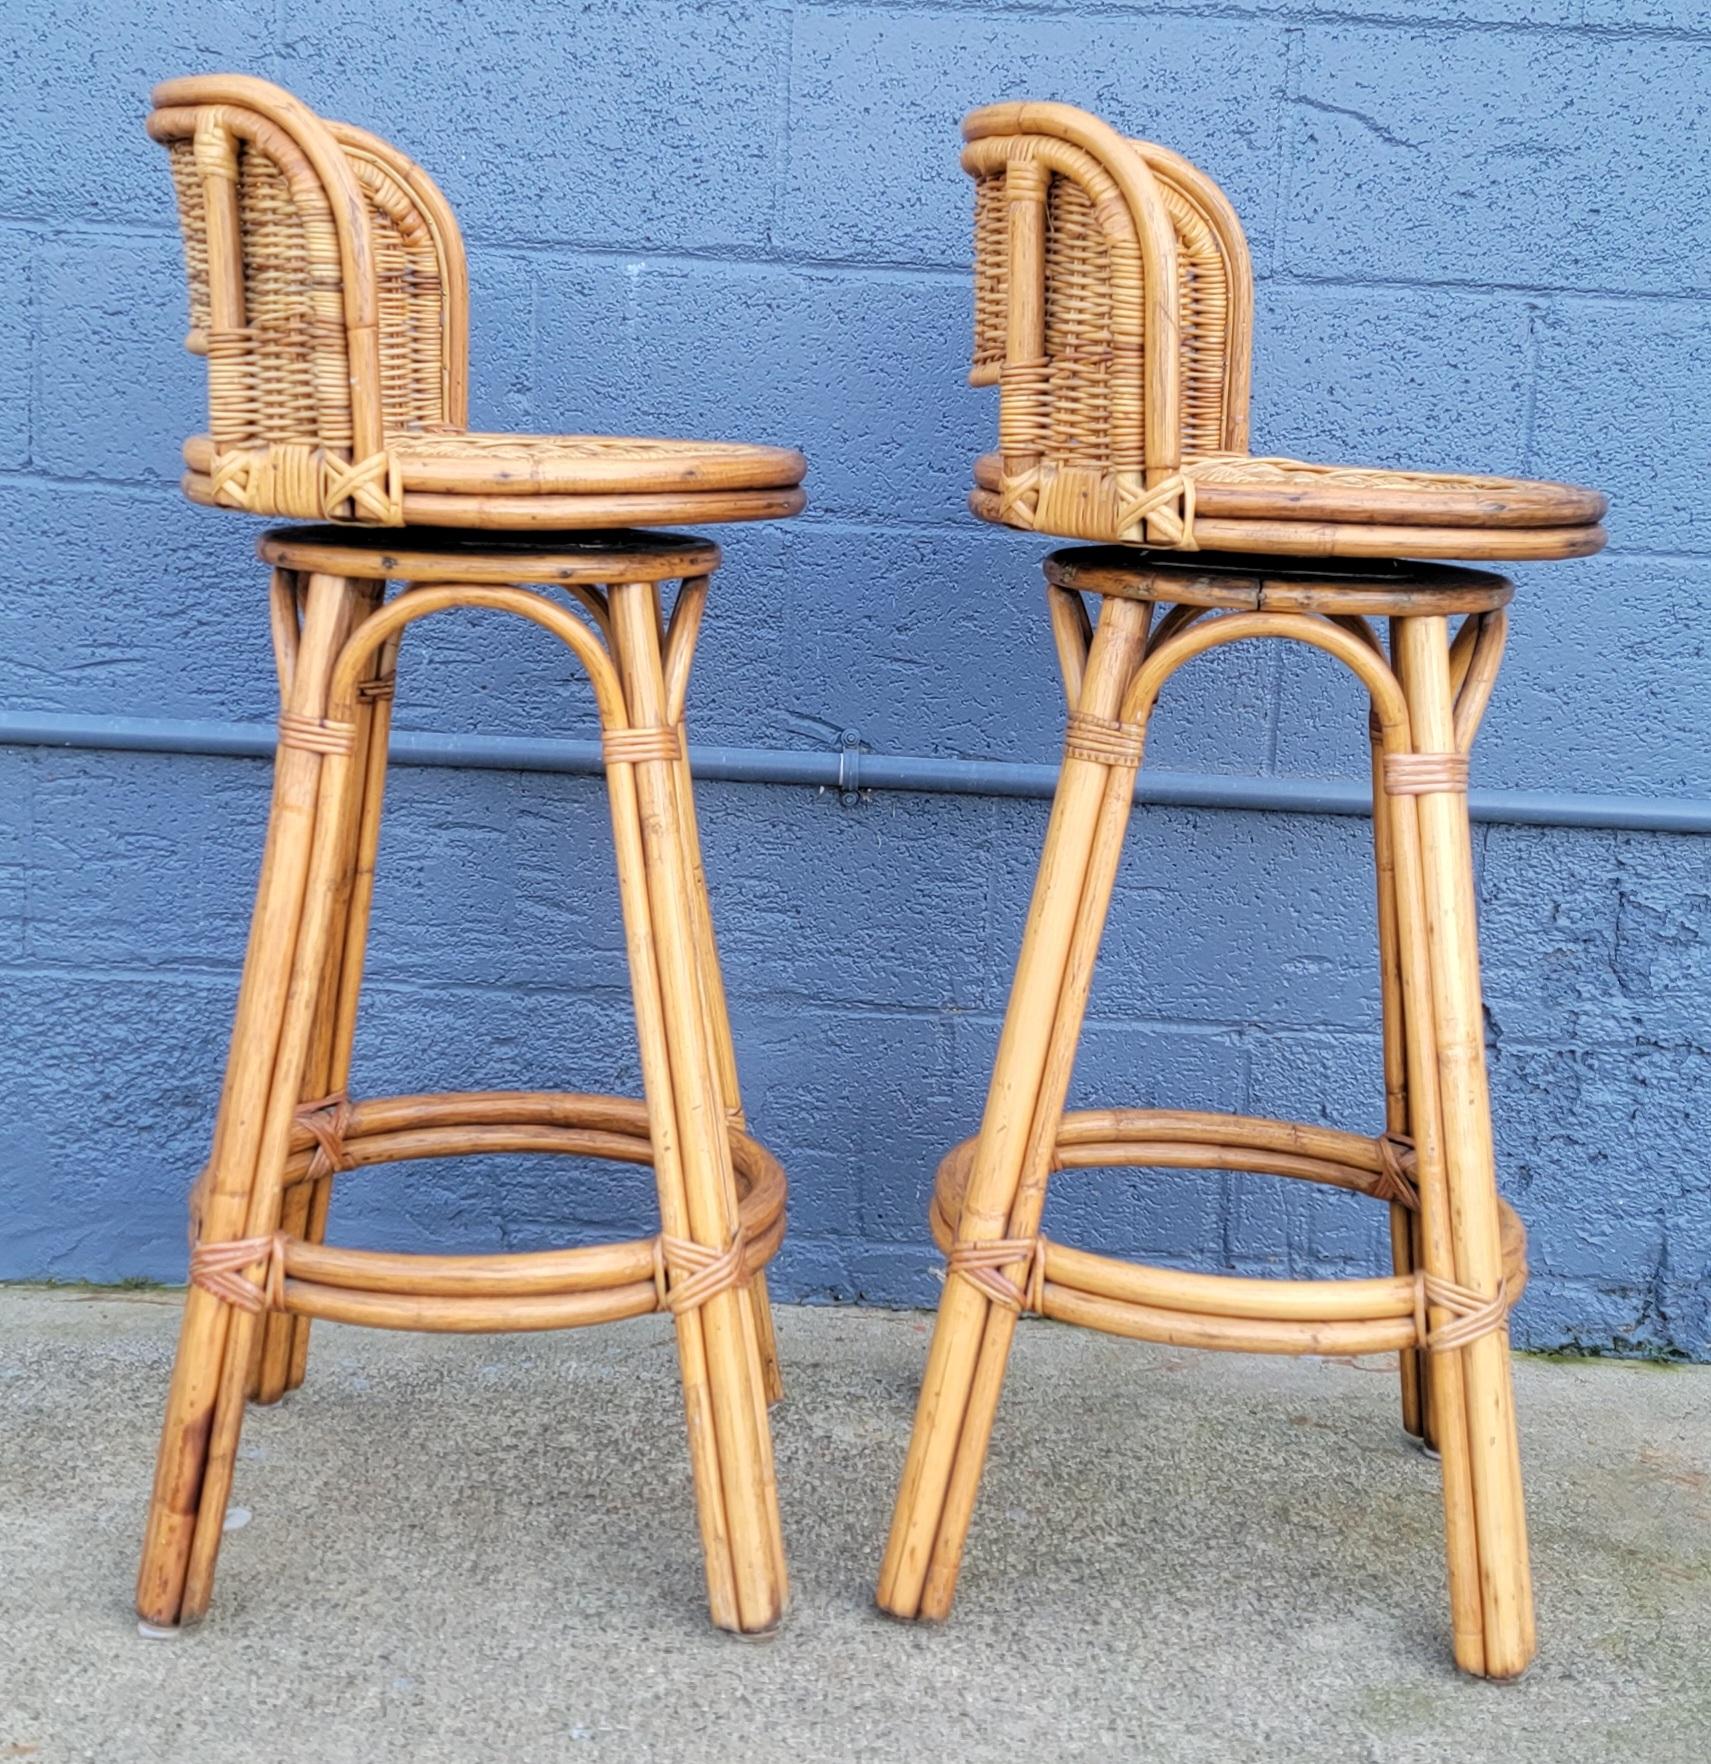 bamboo bar stools with backs